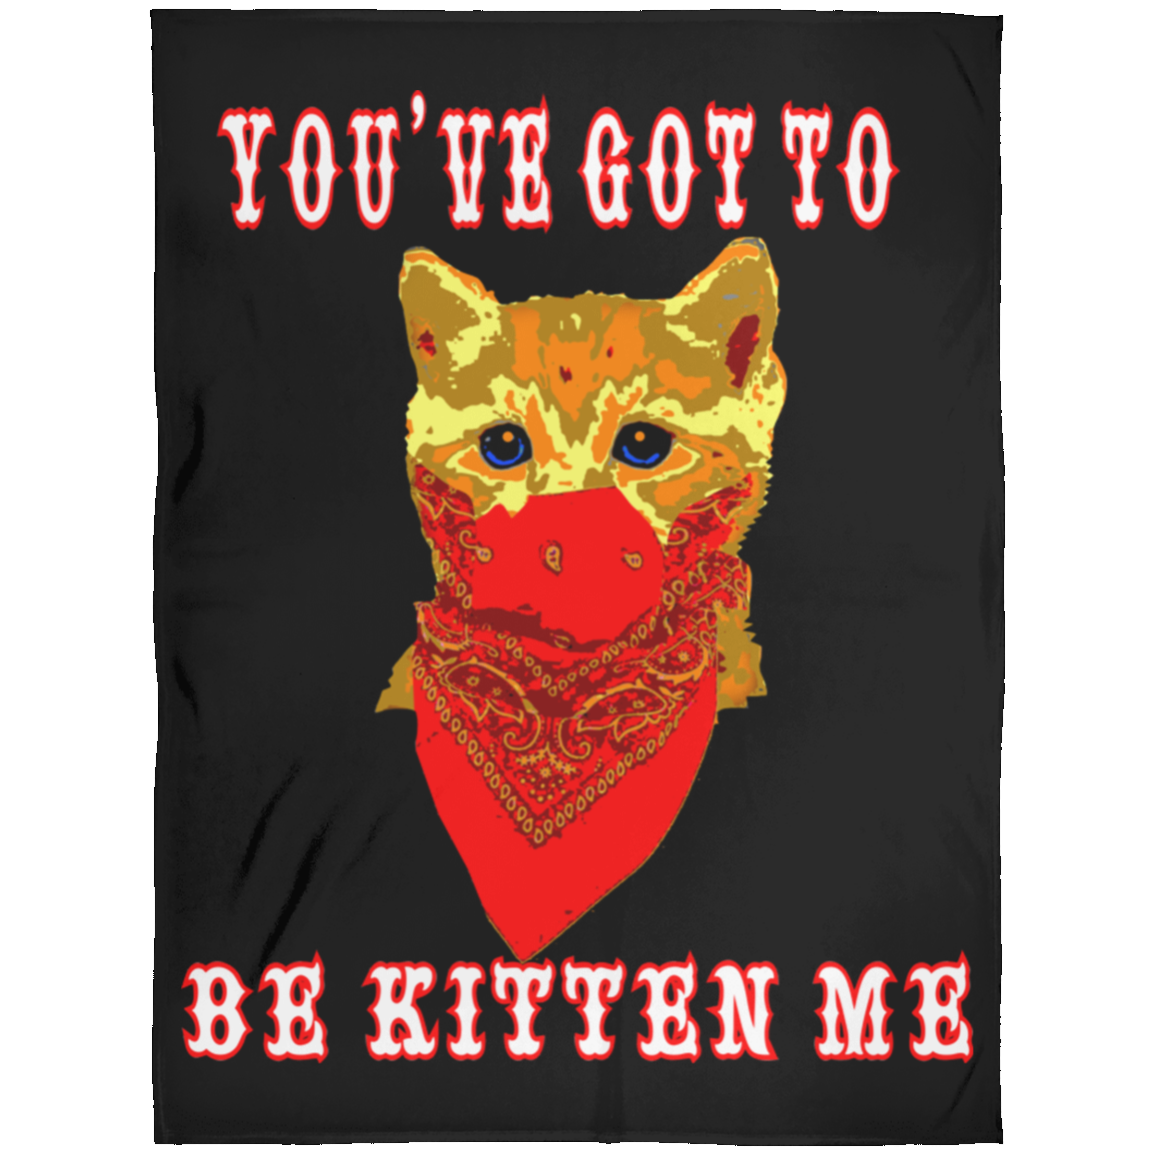 ArtichokeUSA Custom Design. You've Got To Be Kitten Me?! 2020, Not What We Expected. Fleece Blanket 60x80